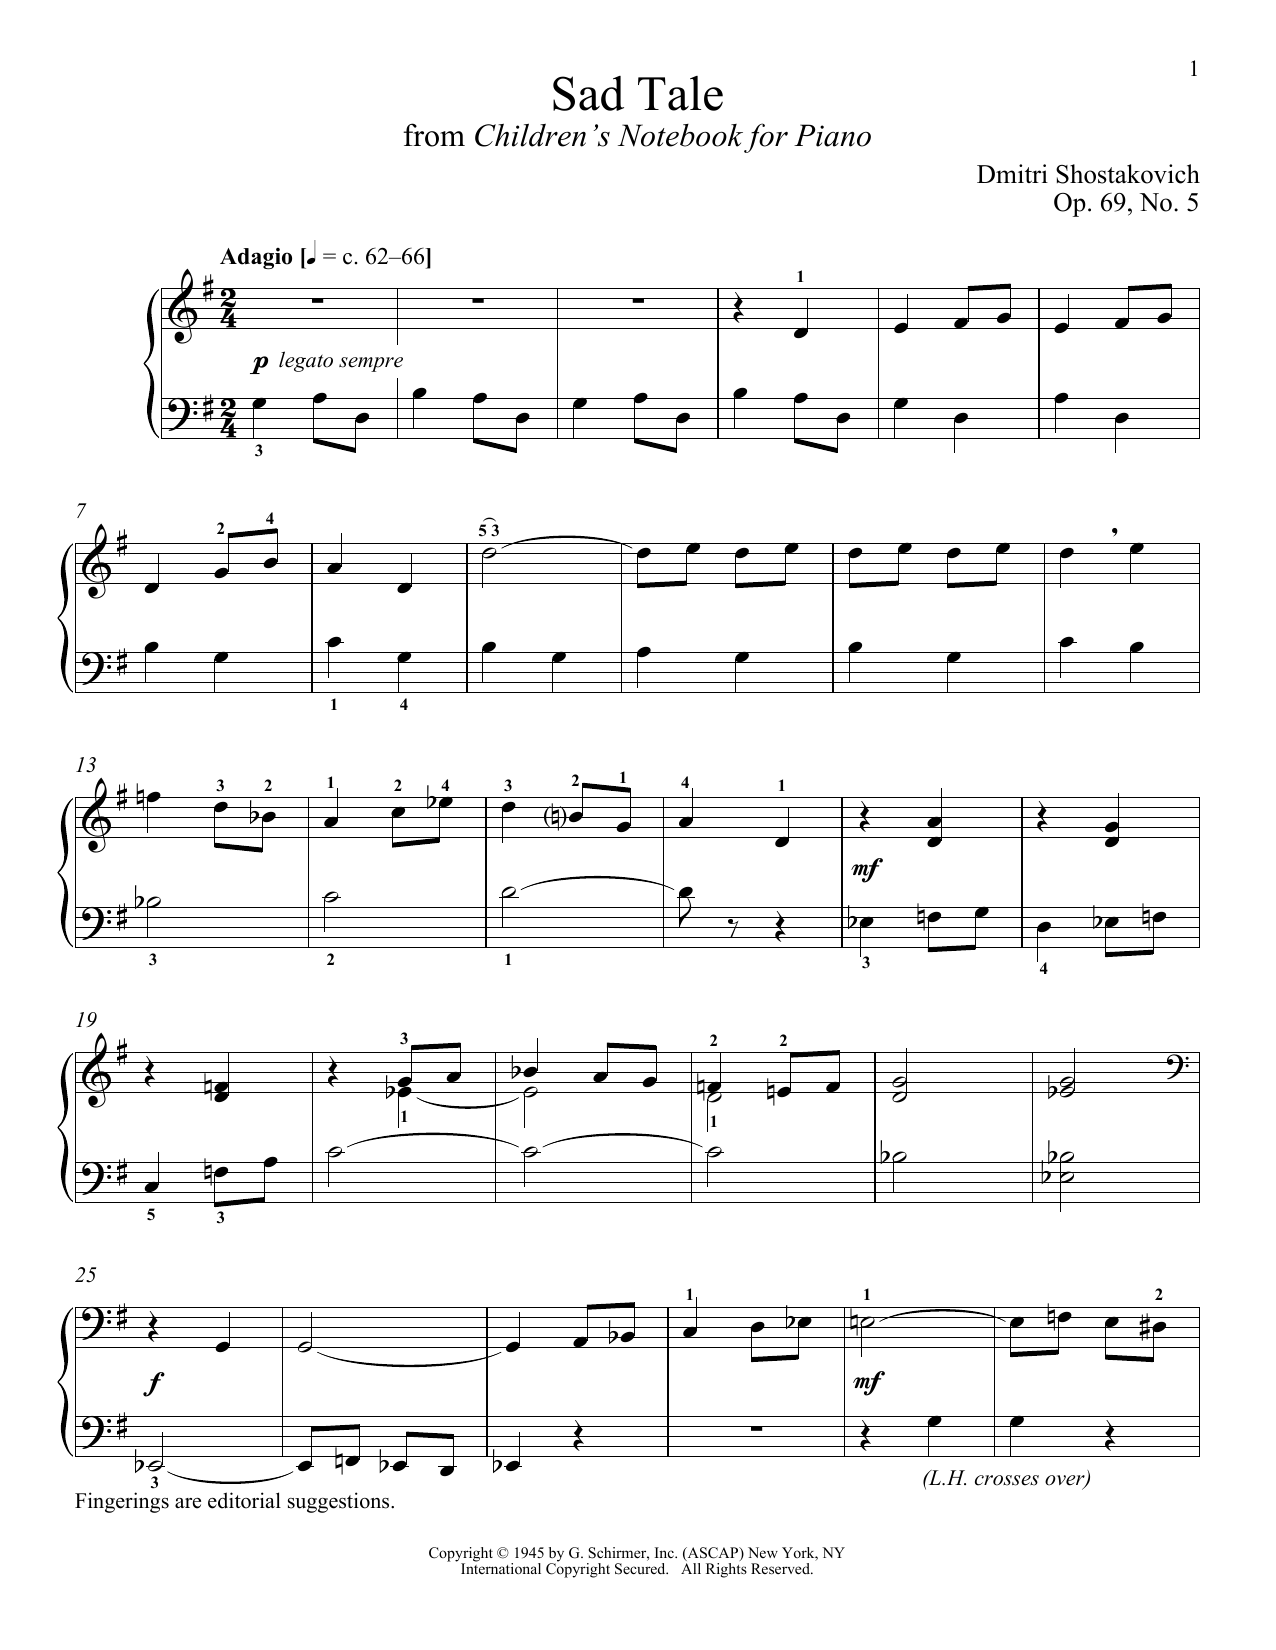 Download Dmitri Shostakovich Sad Tale Sheet Music